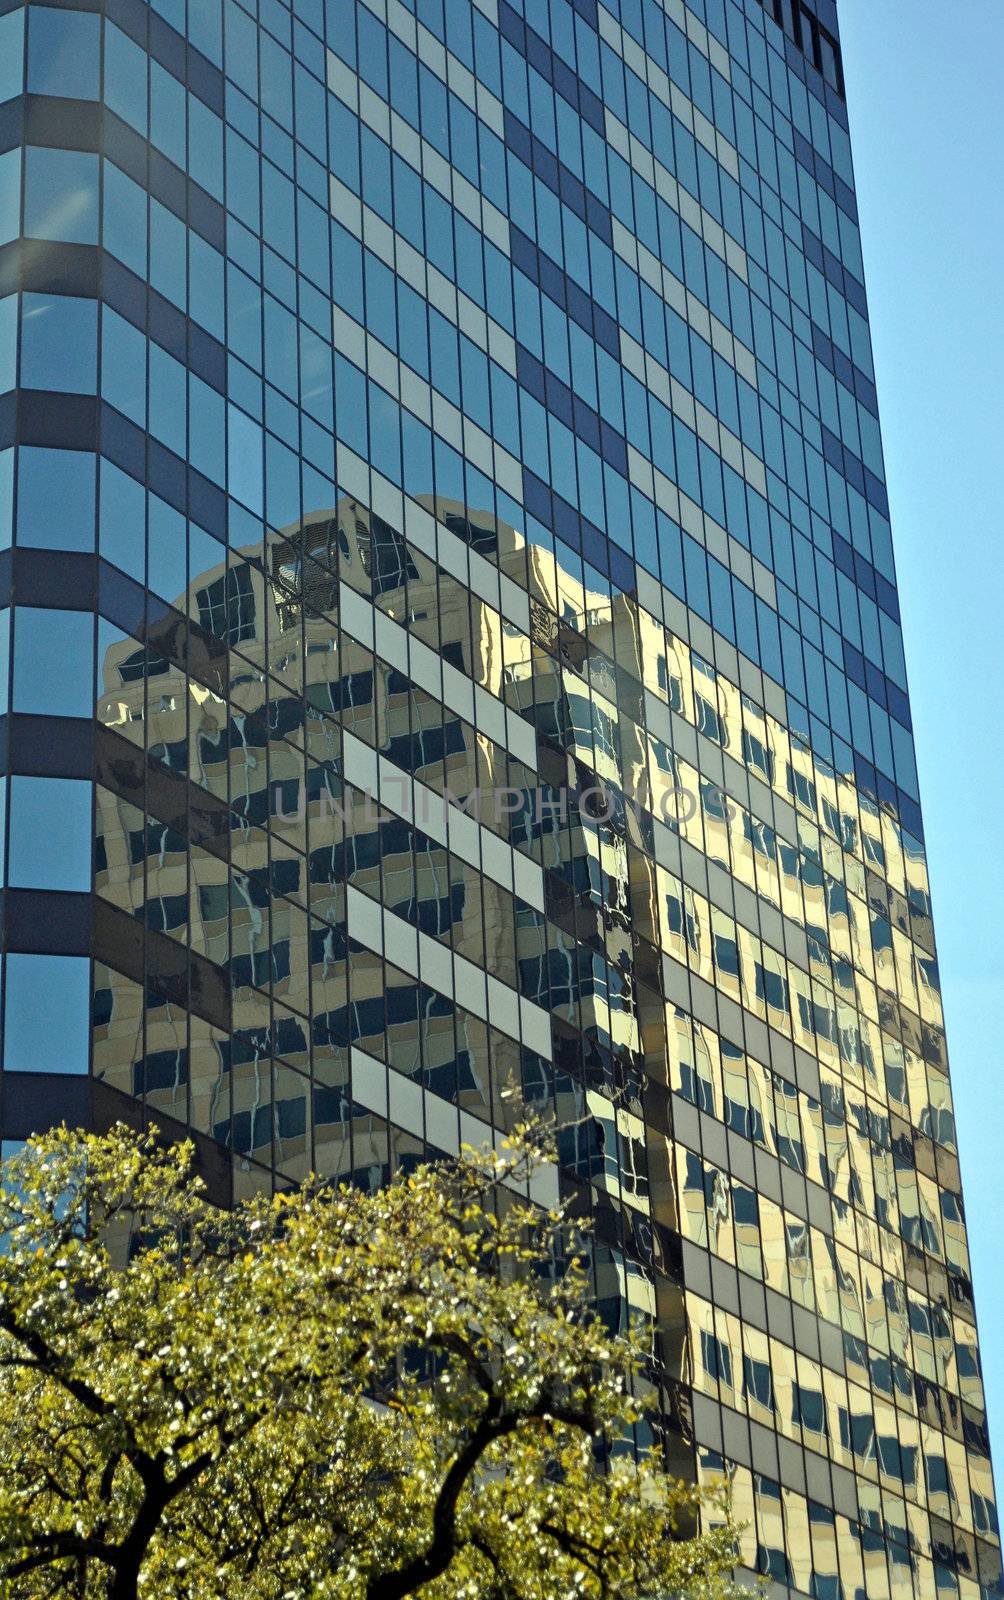 Austin Building Reflection-1.JPG by RefocusPhoto